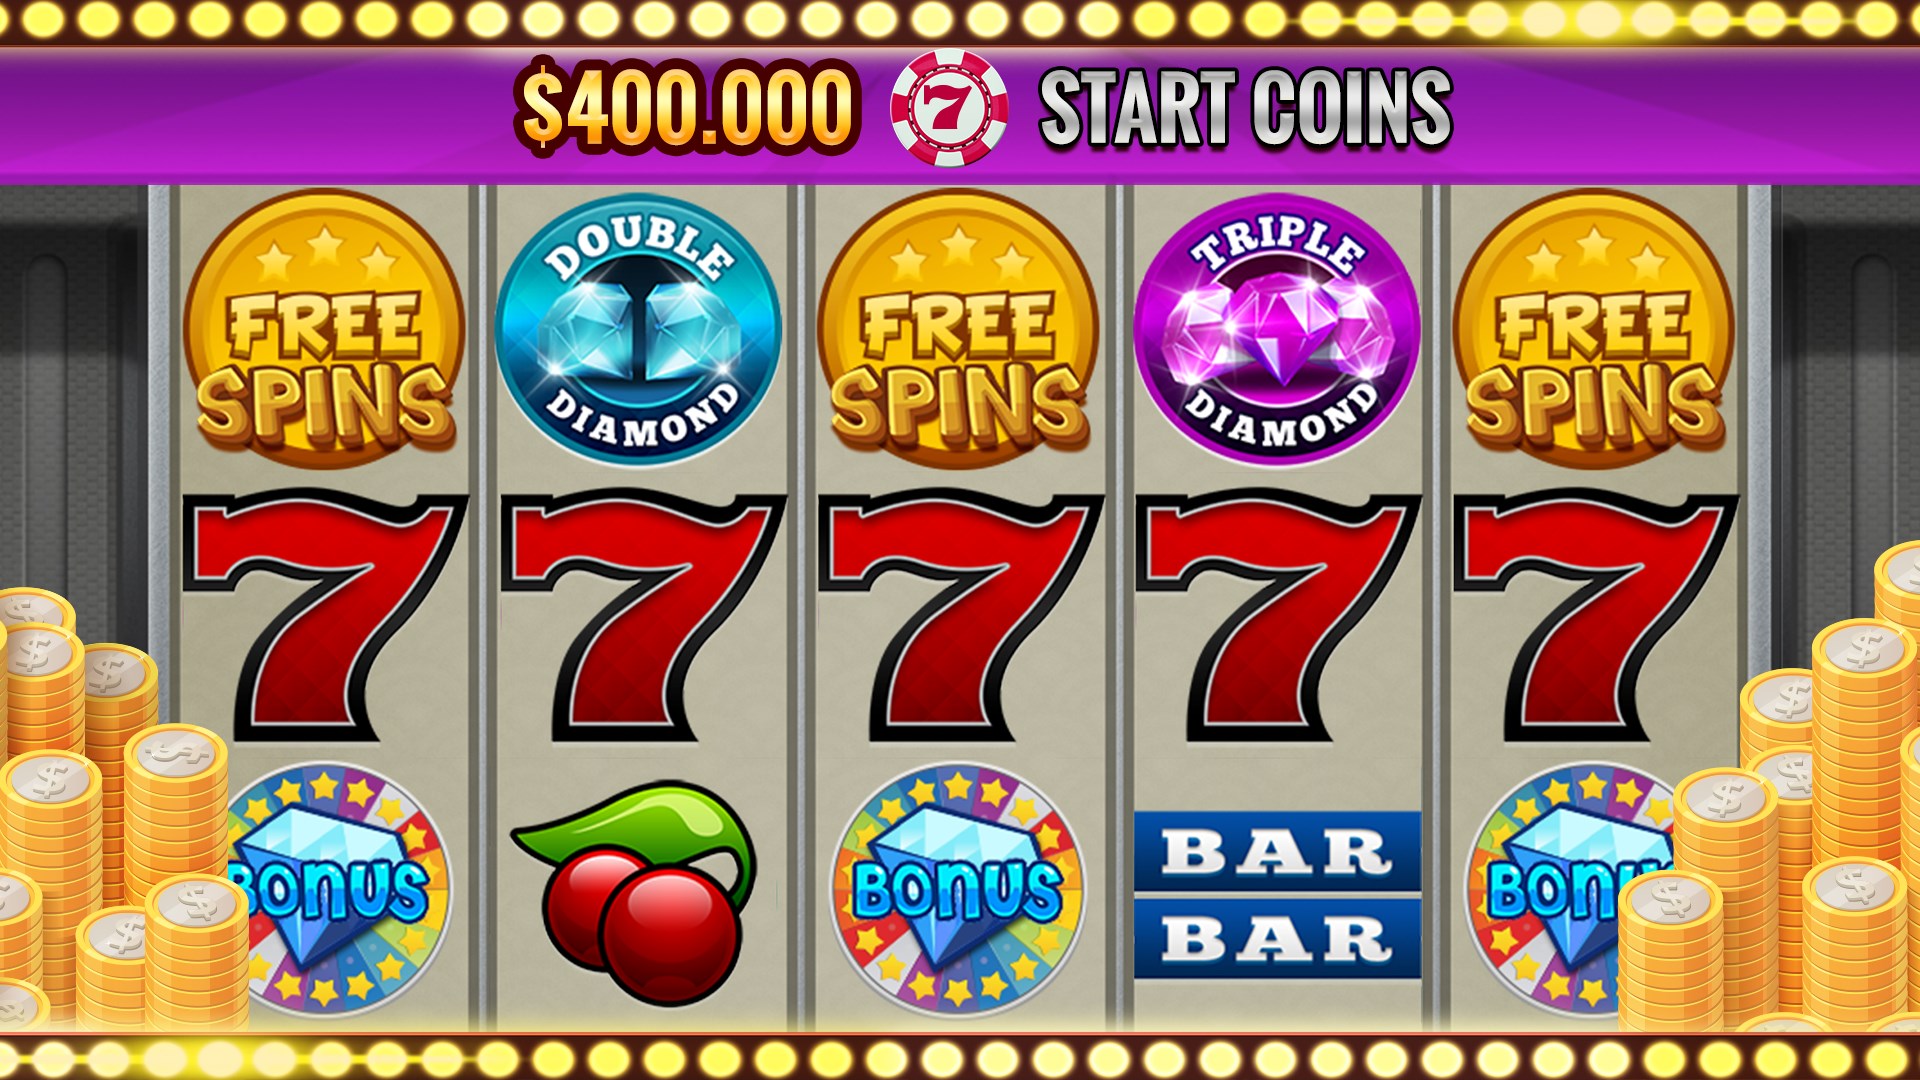 Pink Casino Free Spins